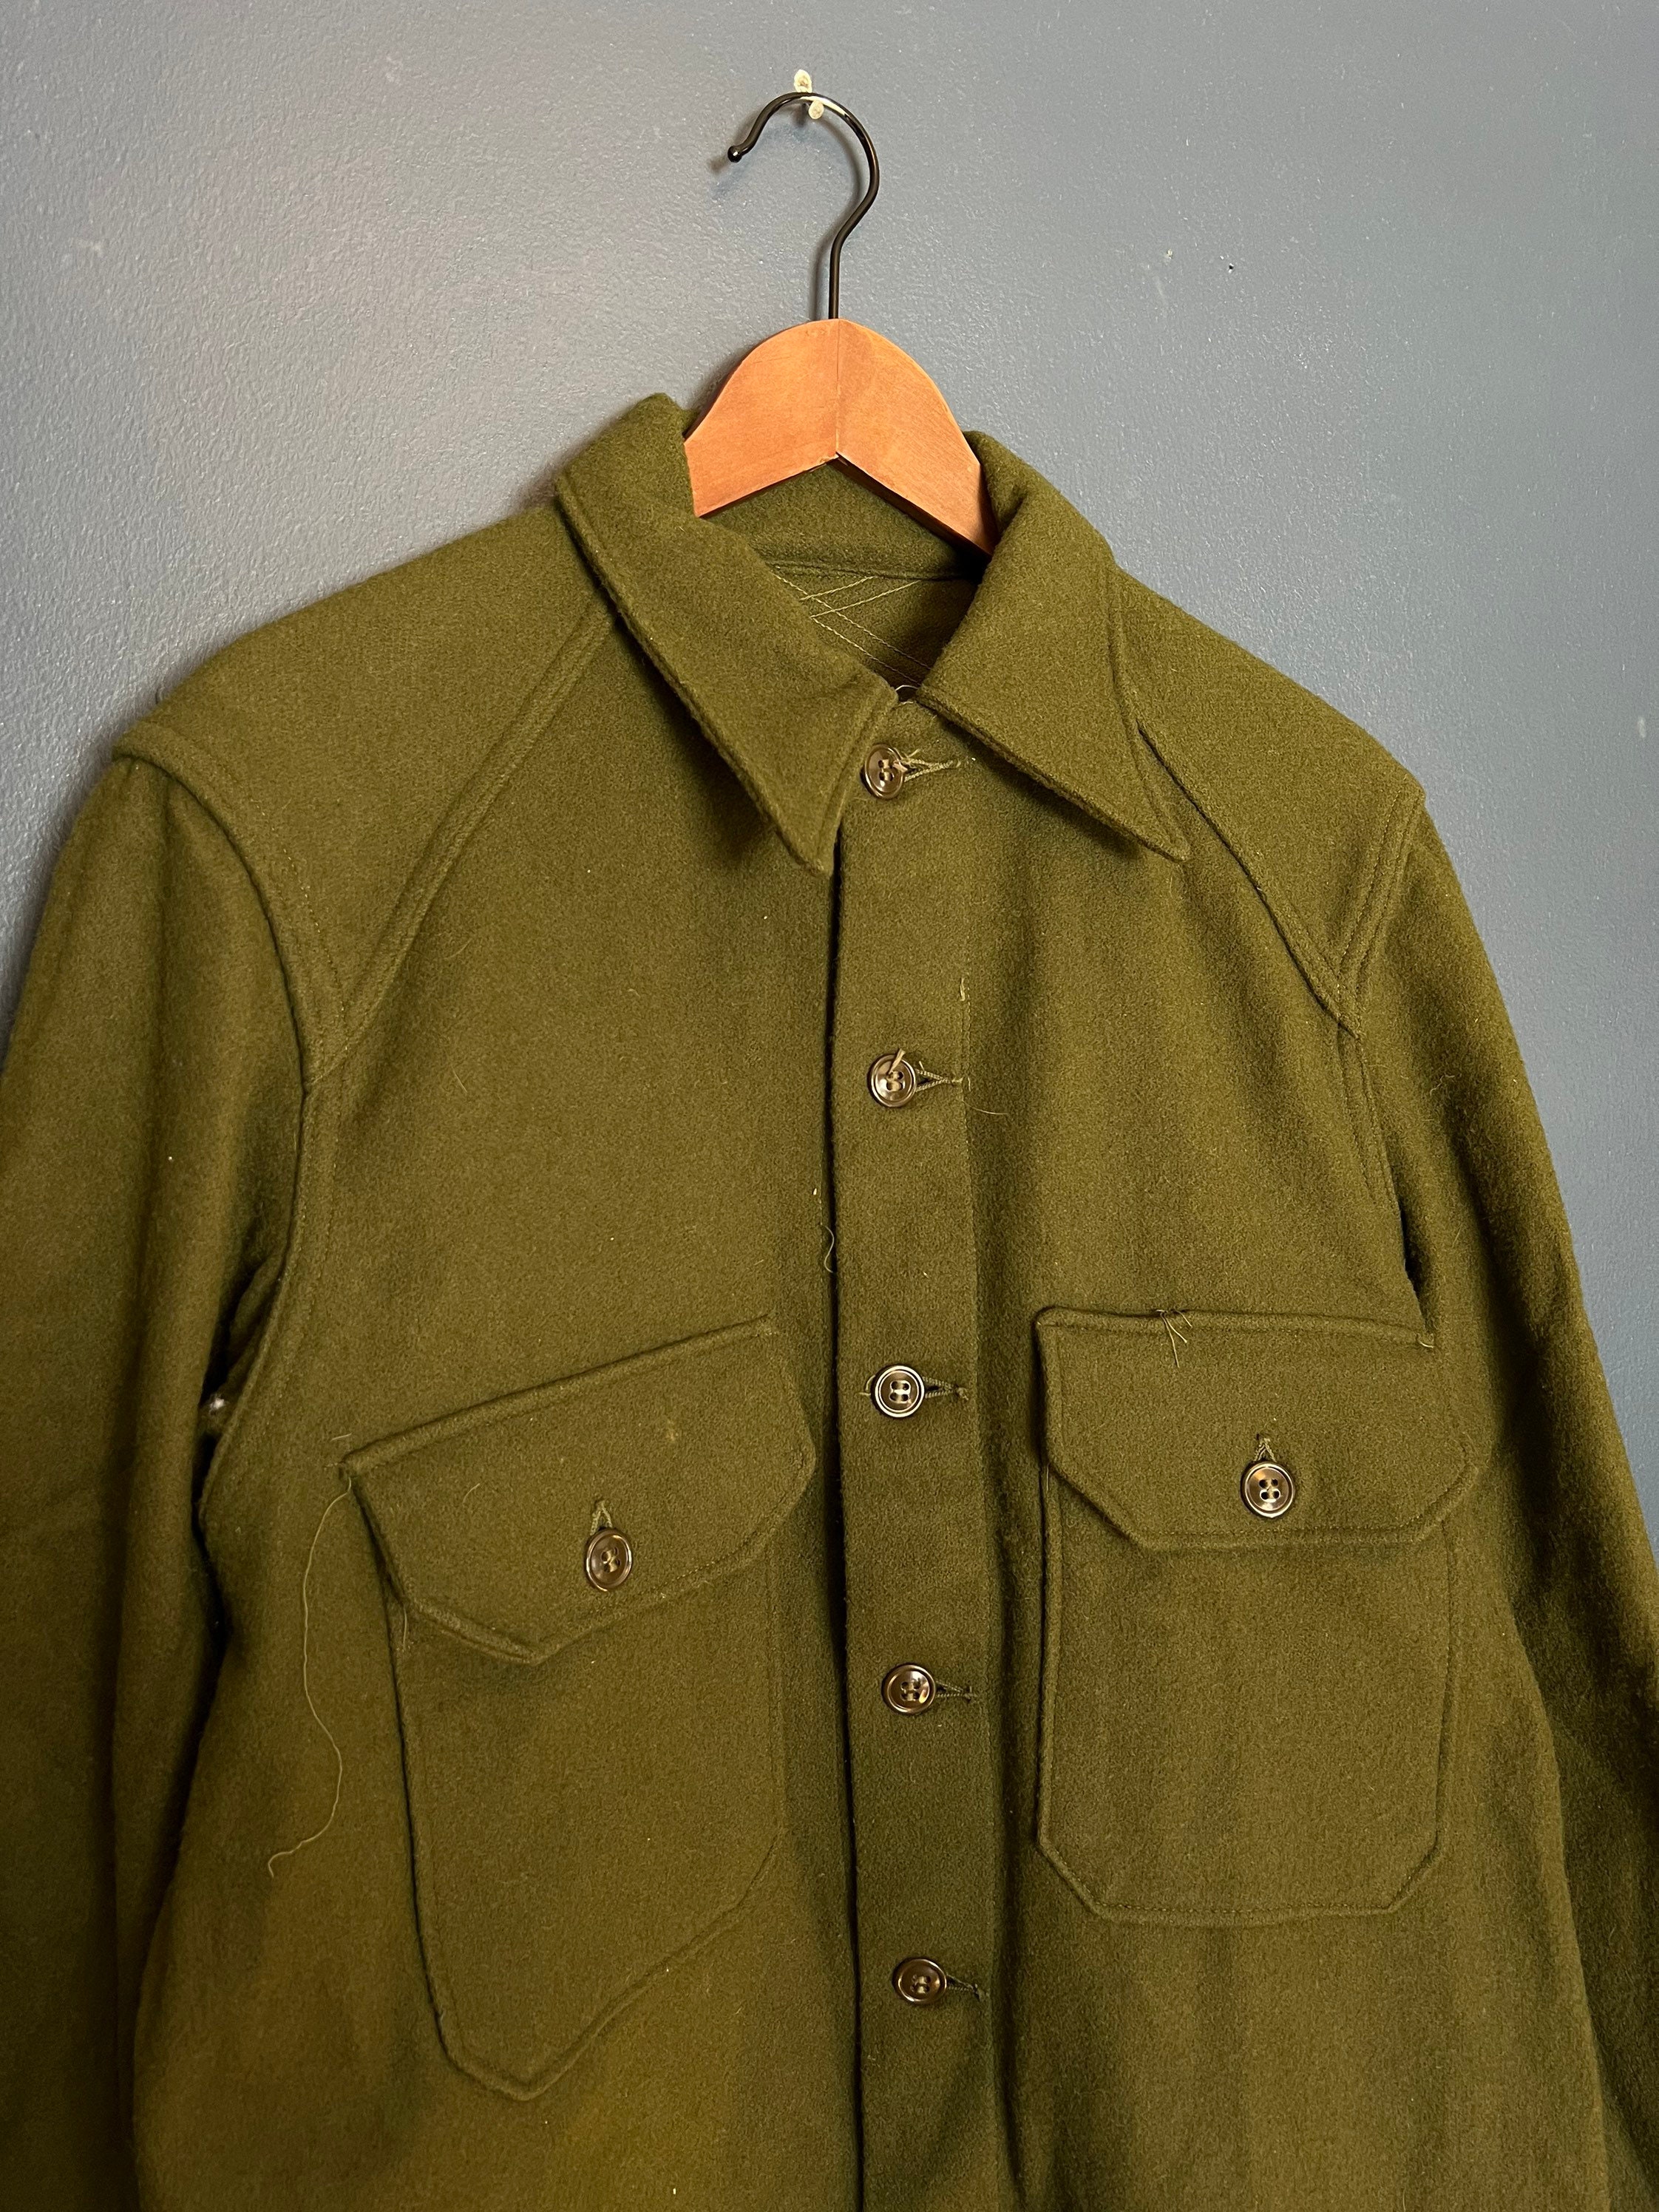 1950s Army Shirt - Etsy